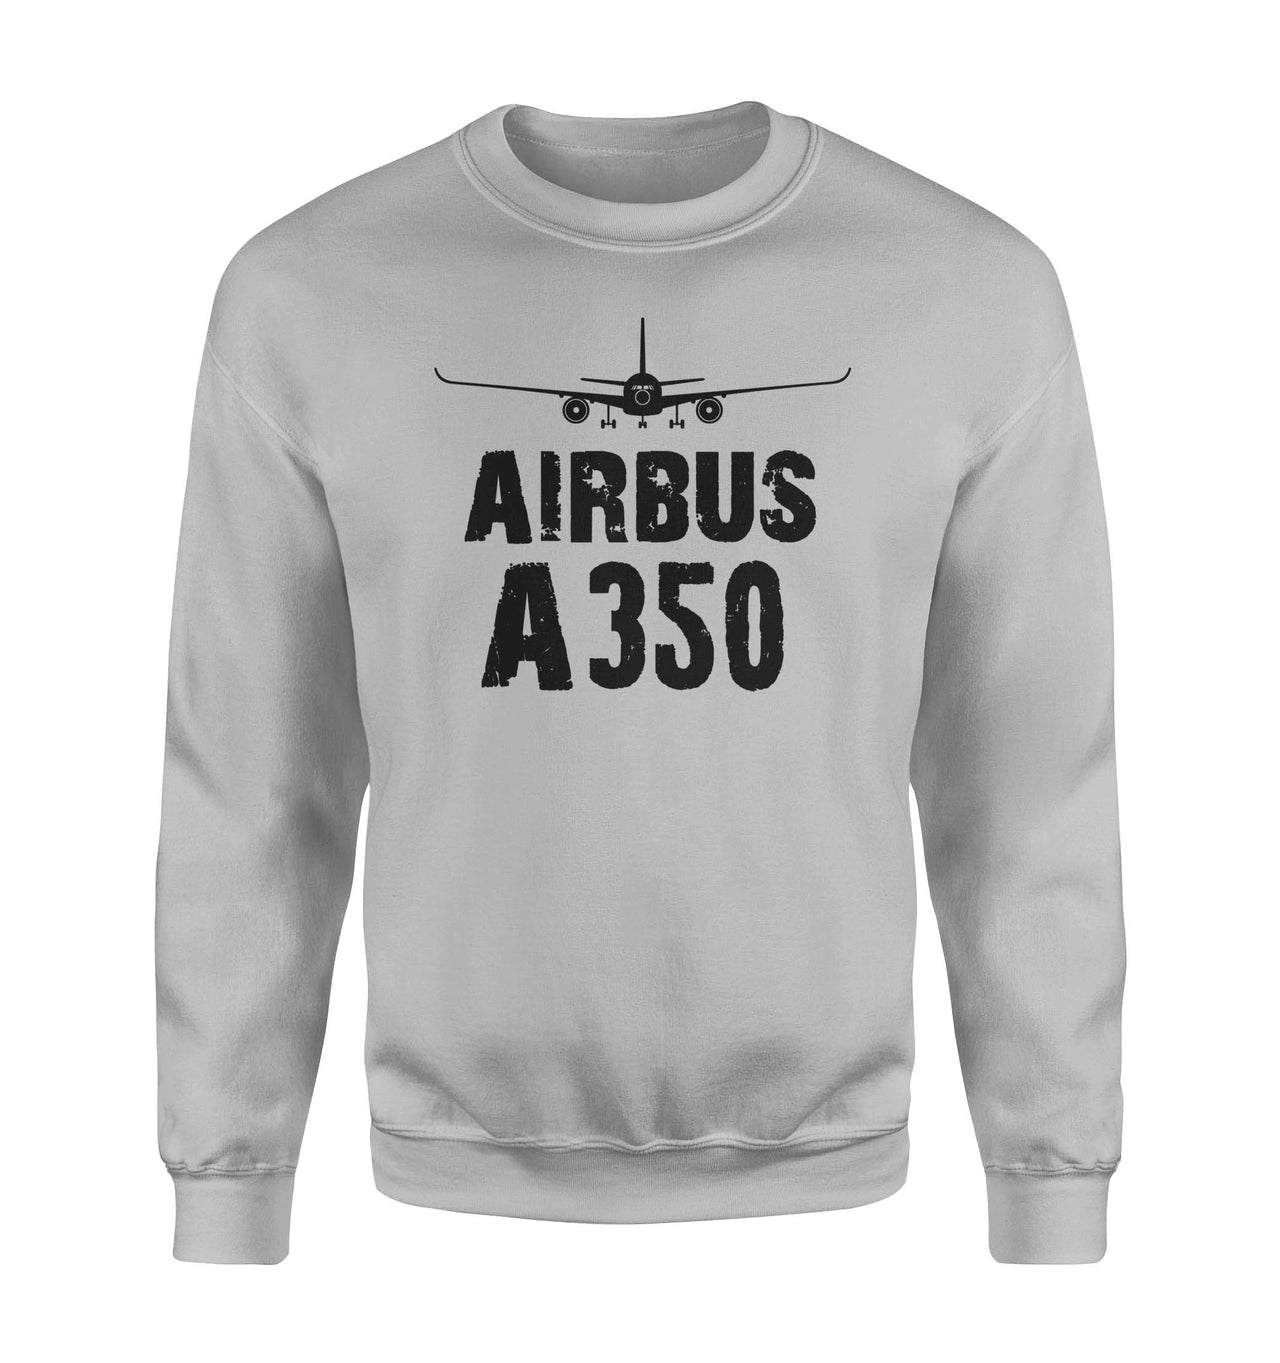 Airbus A350 & Plane Designed Sweatshirts